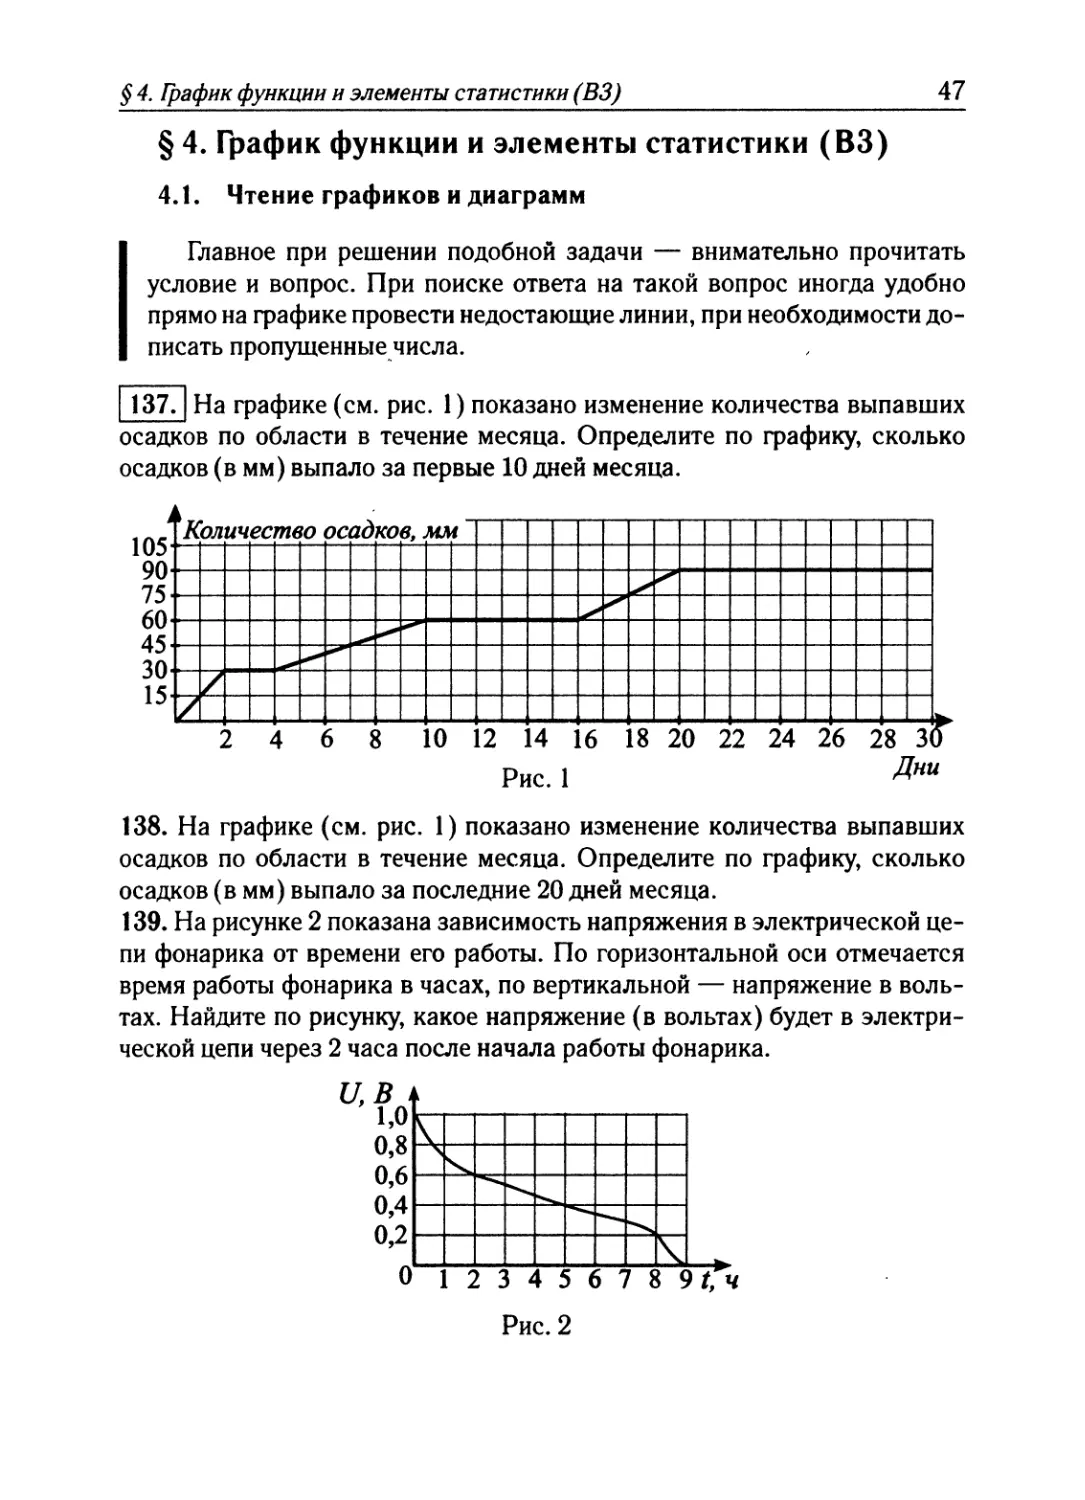 § 4. График функции и элементы статистики